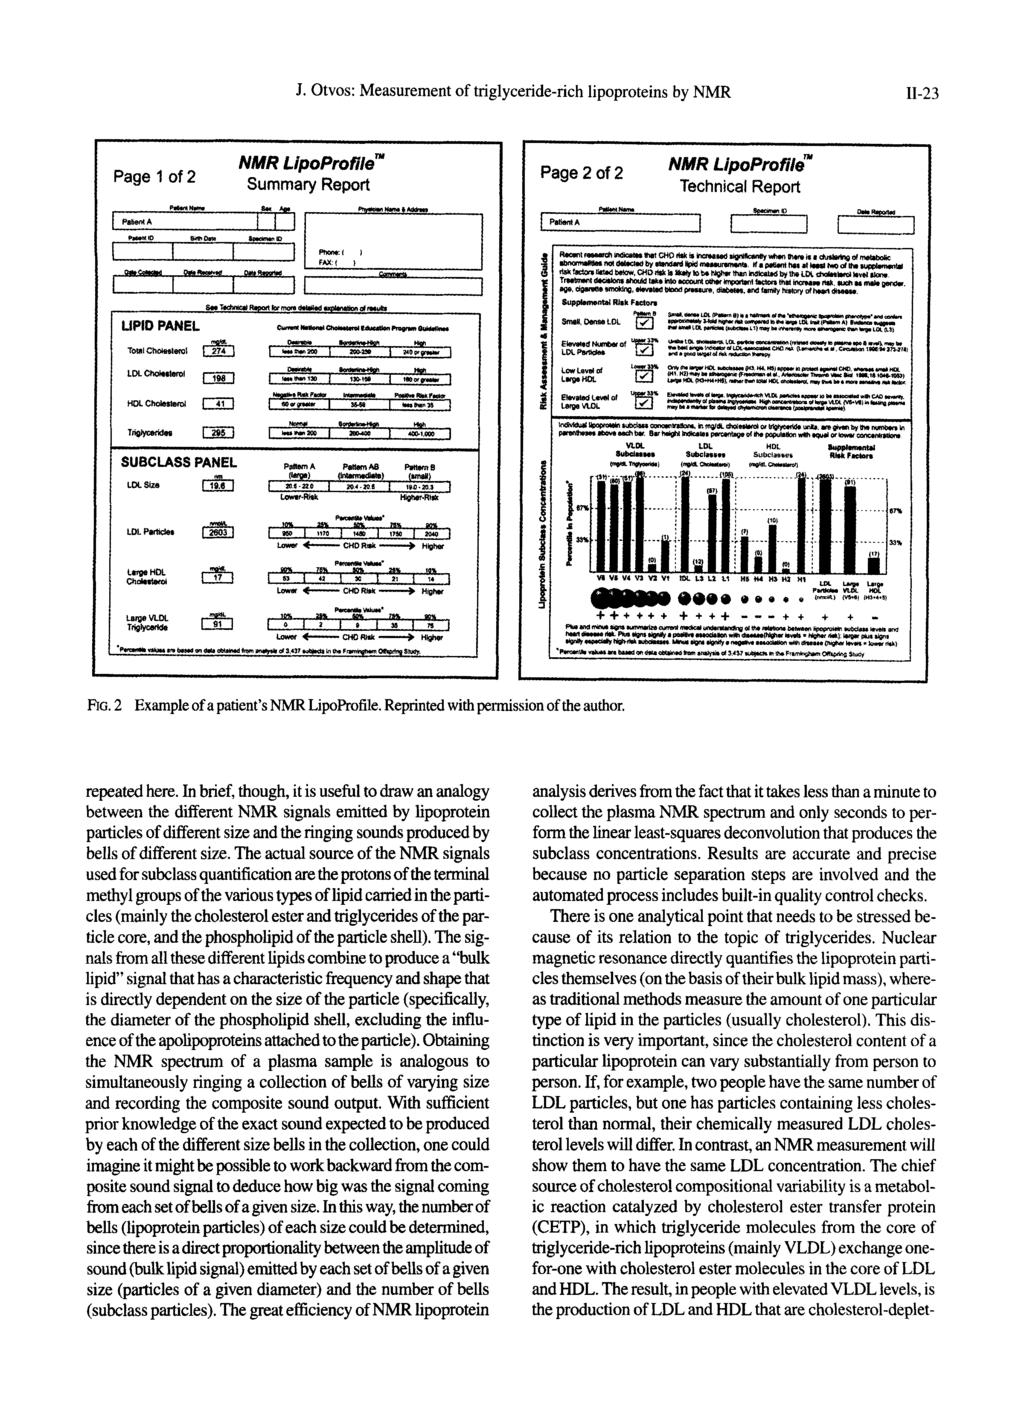 J. Otvos: Measurement of triglyceride-rich lipoproteins by NMR 11-23 Page Of NMR LipoProfilem Technical Report I I I I SUBCLASS PANEL 1MSIze & we no La*Rhk -- ++tttt ++++ - - - + t + + - FIG.